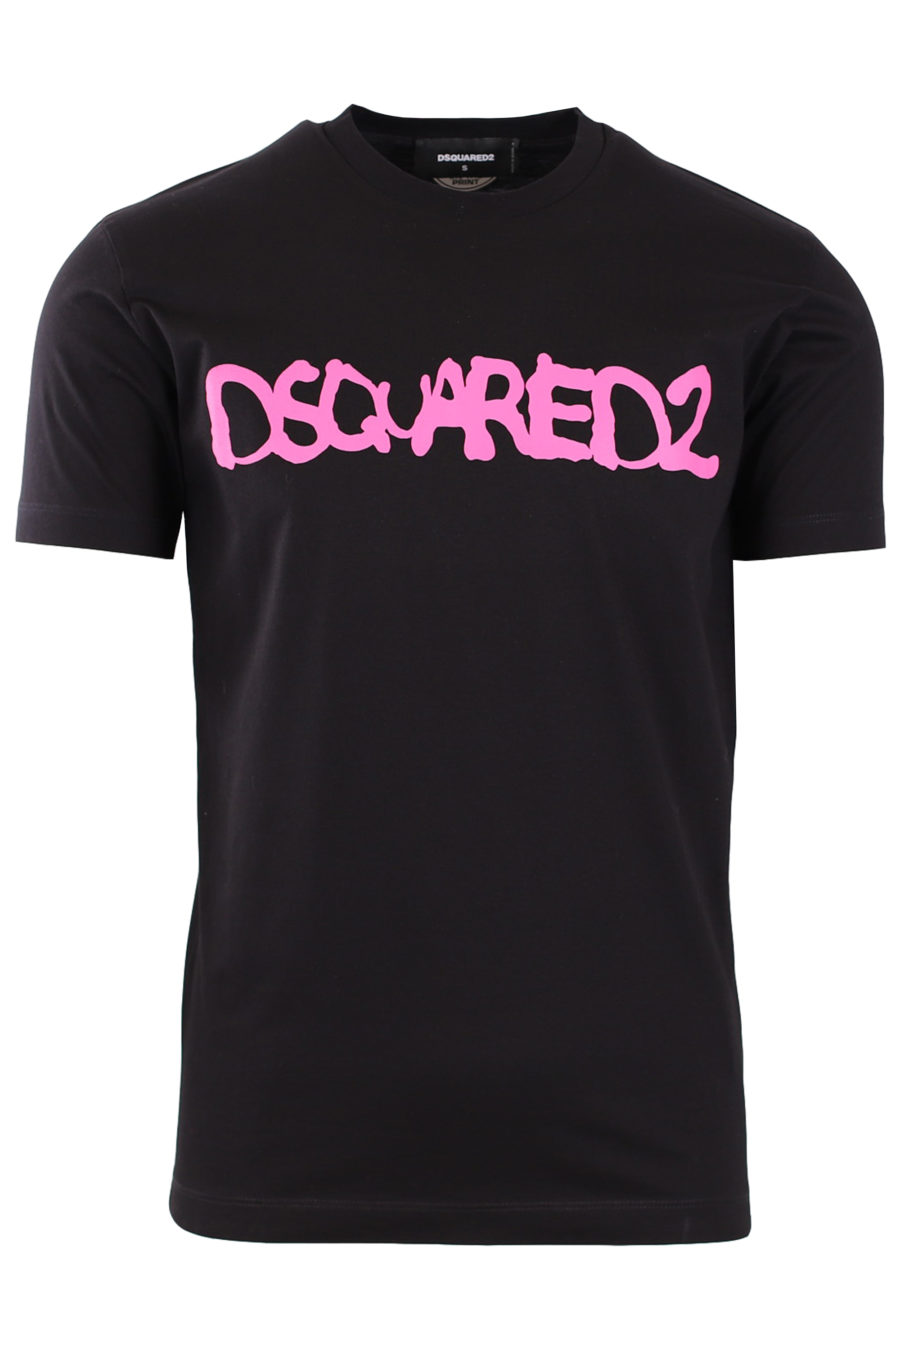 Black T-shirt with pink brand logo - 6f5513afce2c93c2d981805b39cf2b45f3f62ee5